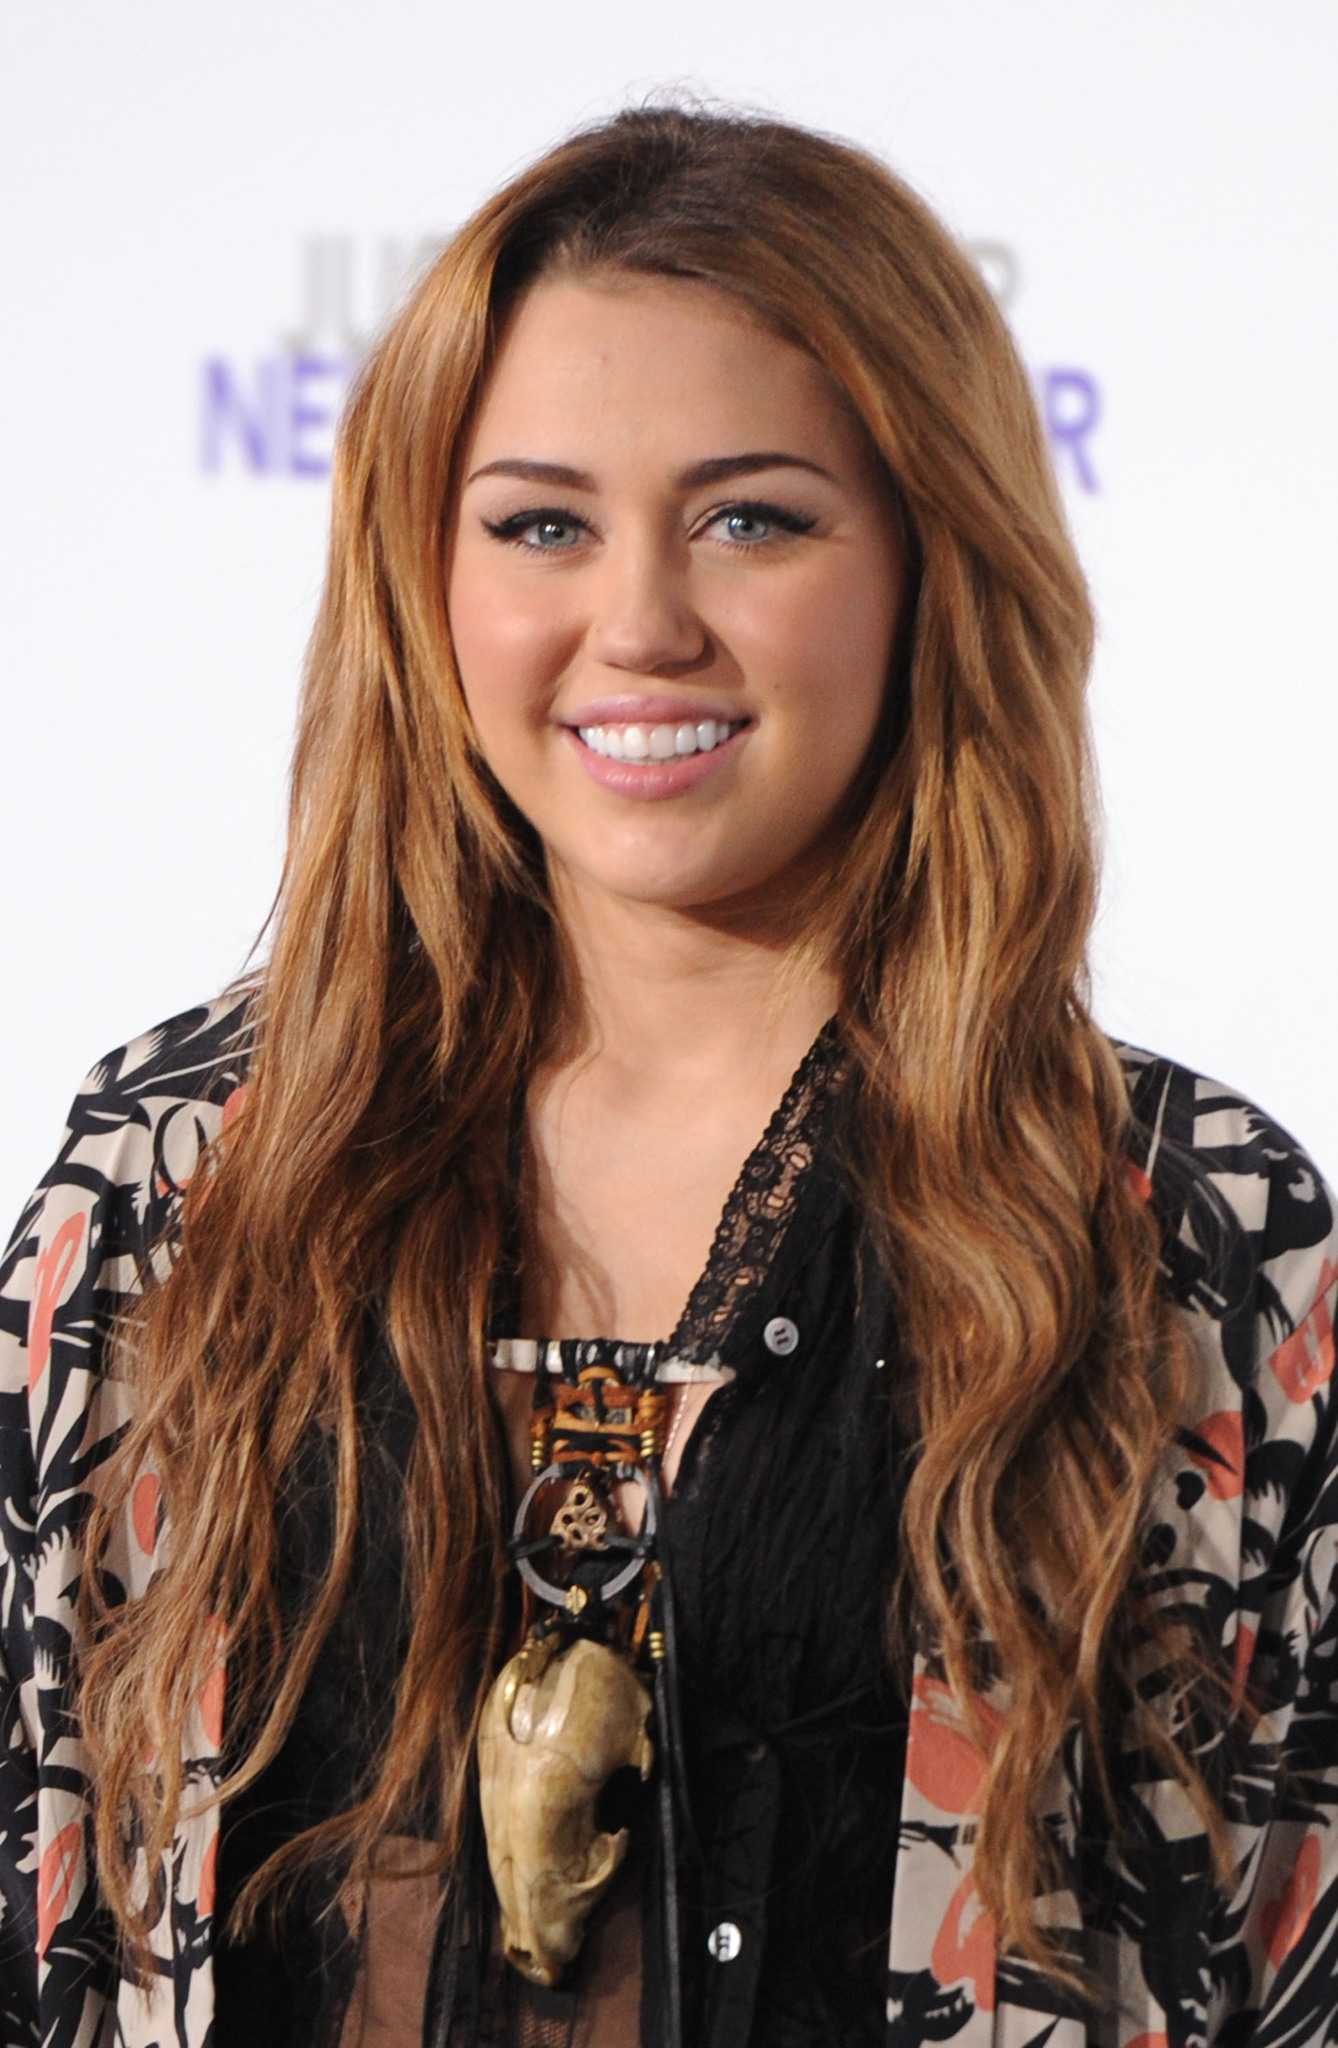 Miley Cyrus at event of Justin'as Bieber'is: niekada nesakyk niekada (2011)